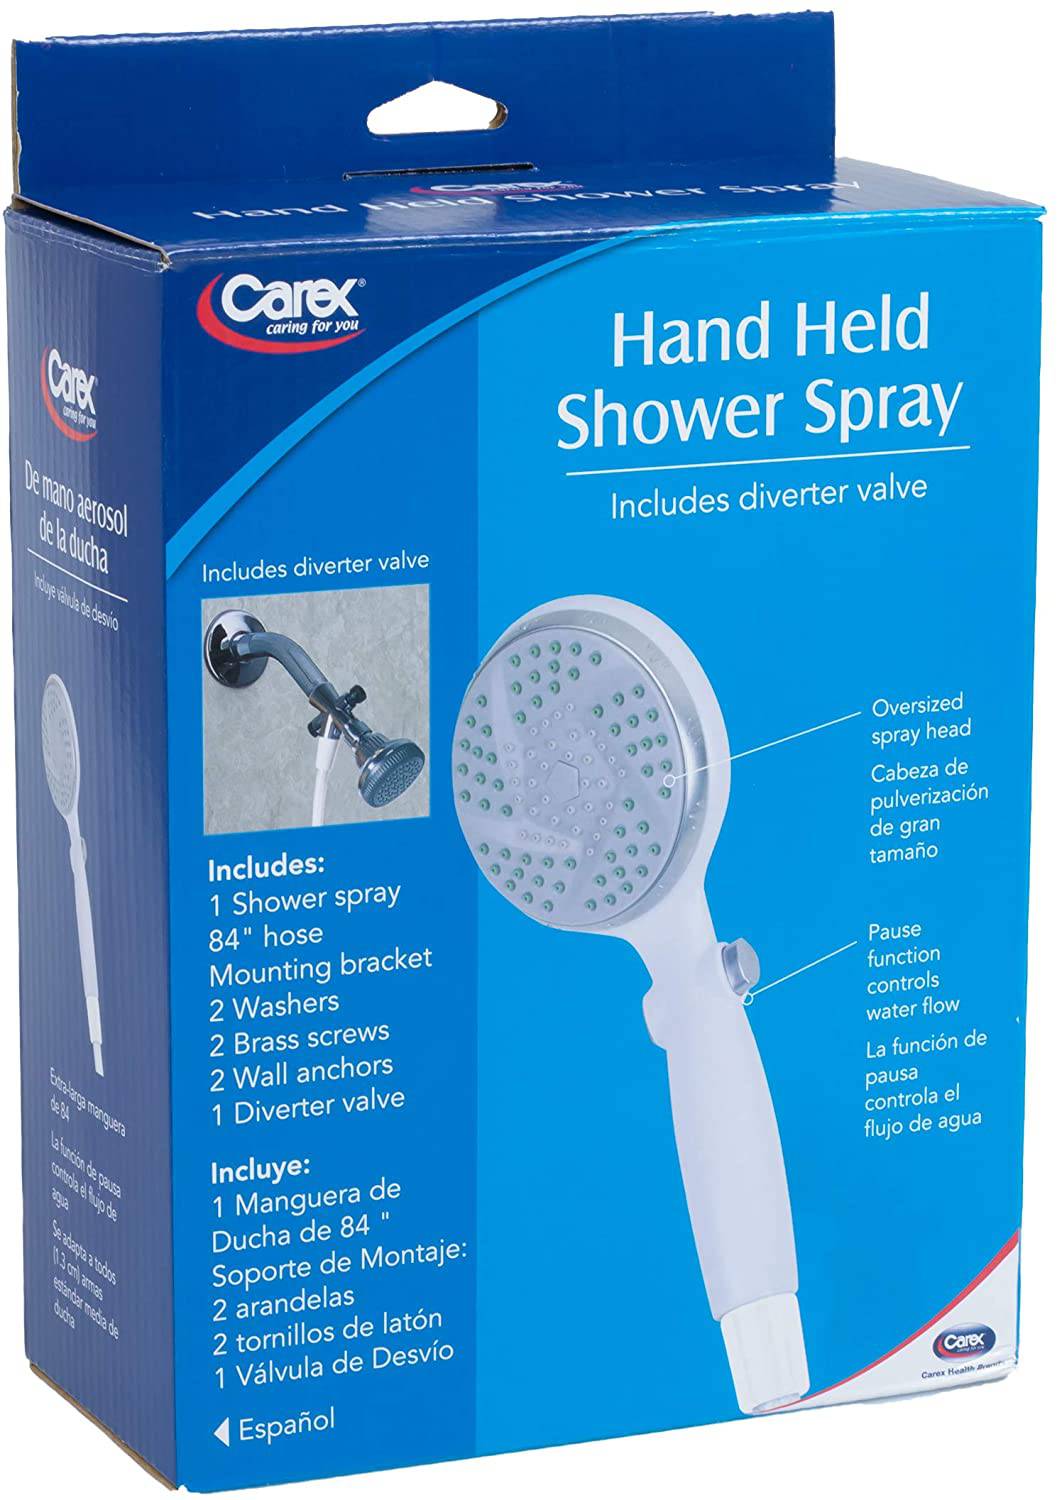 Carex Hand-Held Shower Spray With Diverter Valve - Carex Health Brands